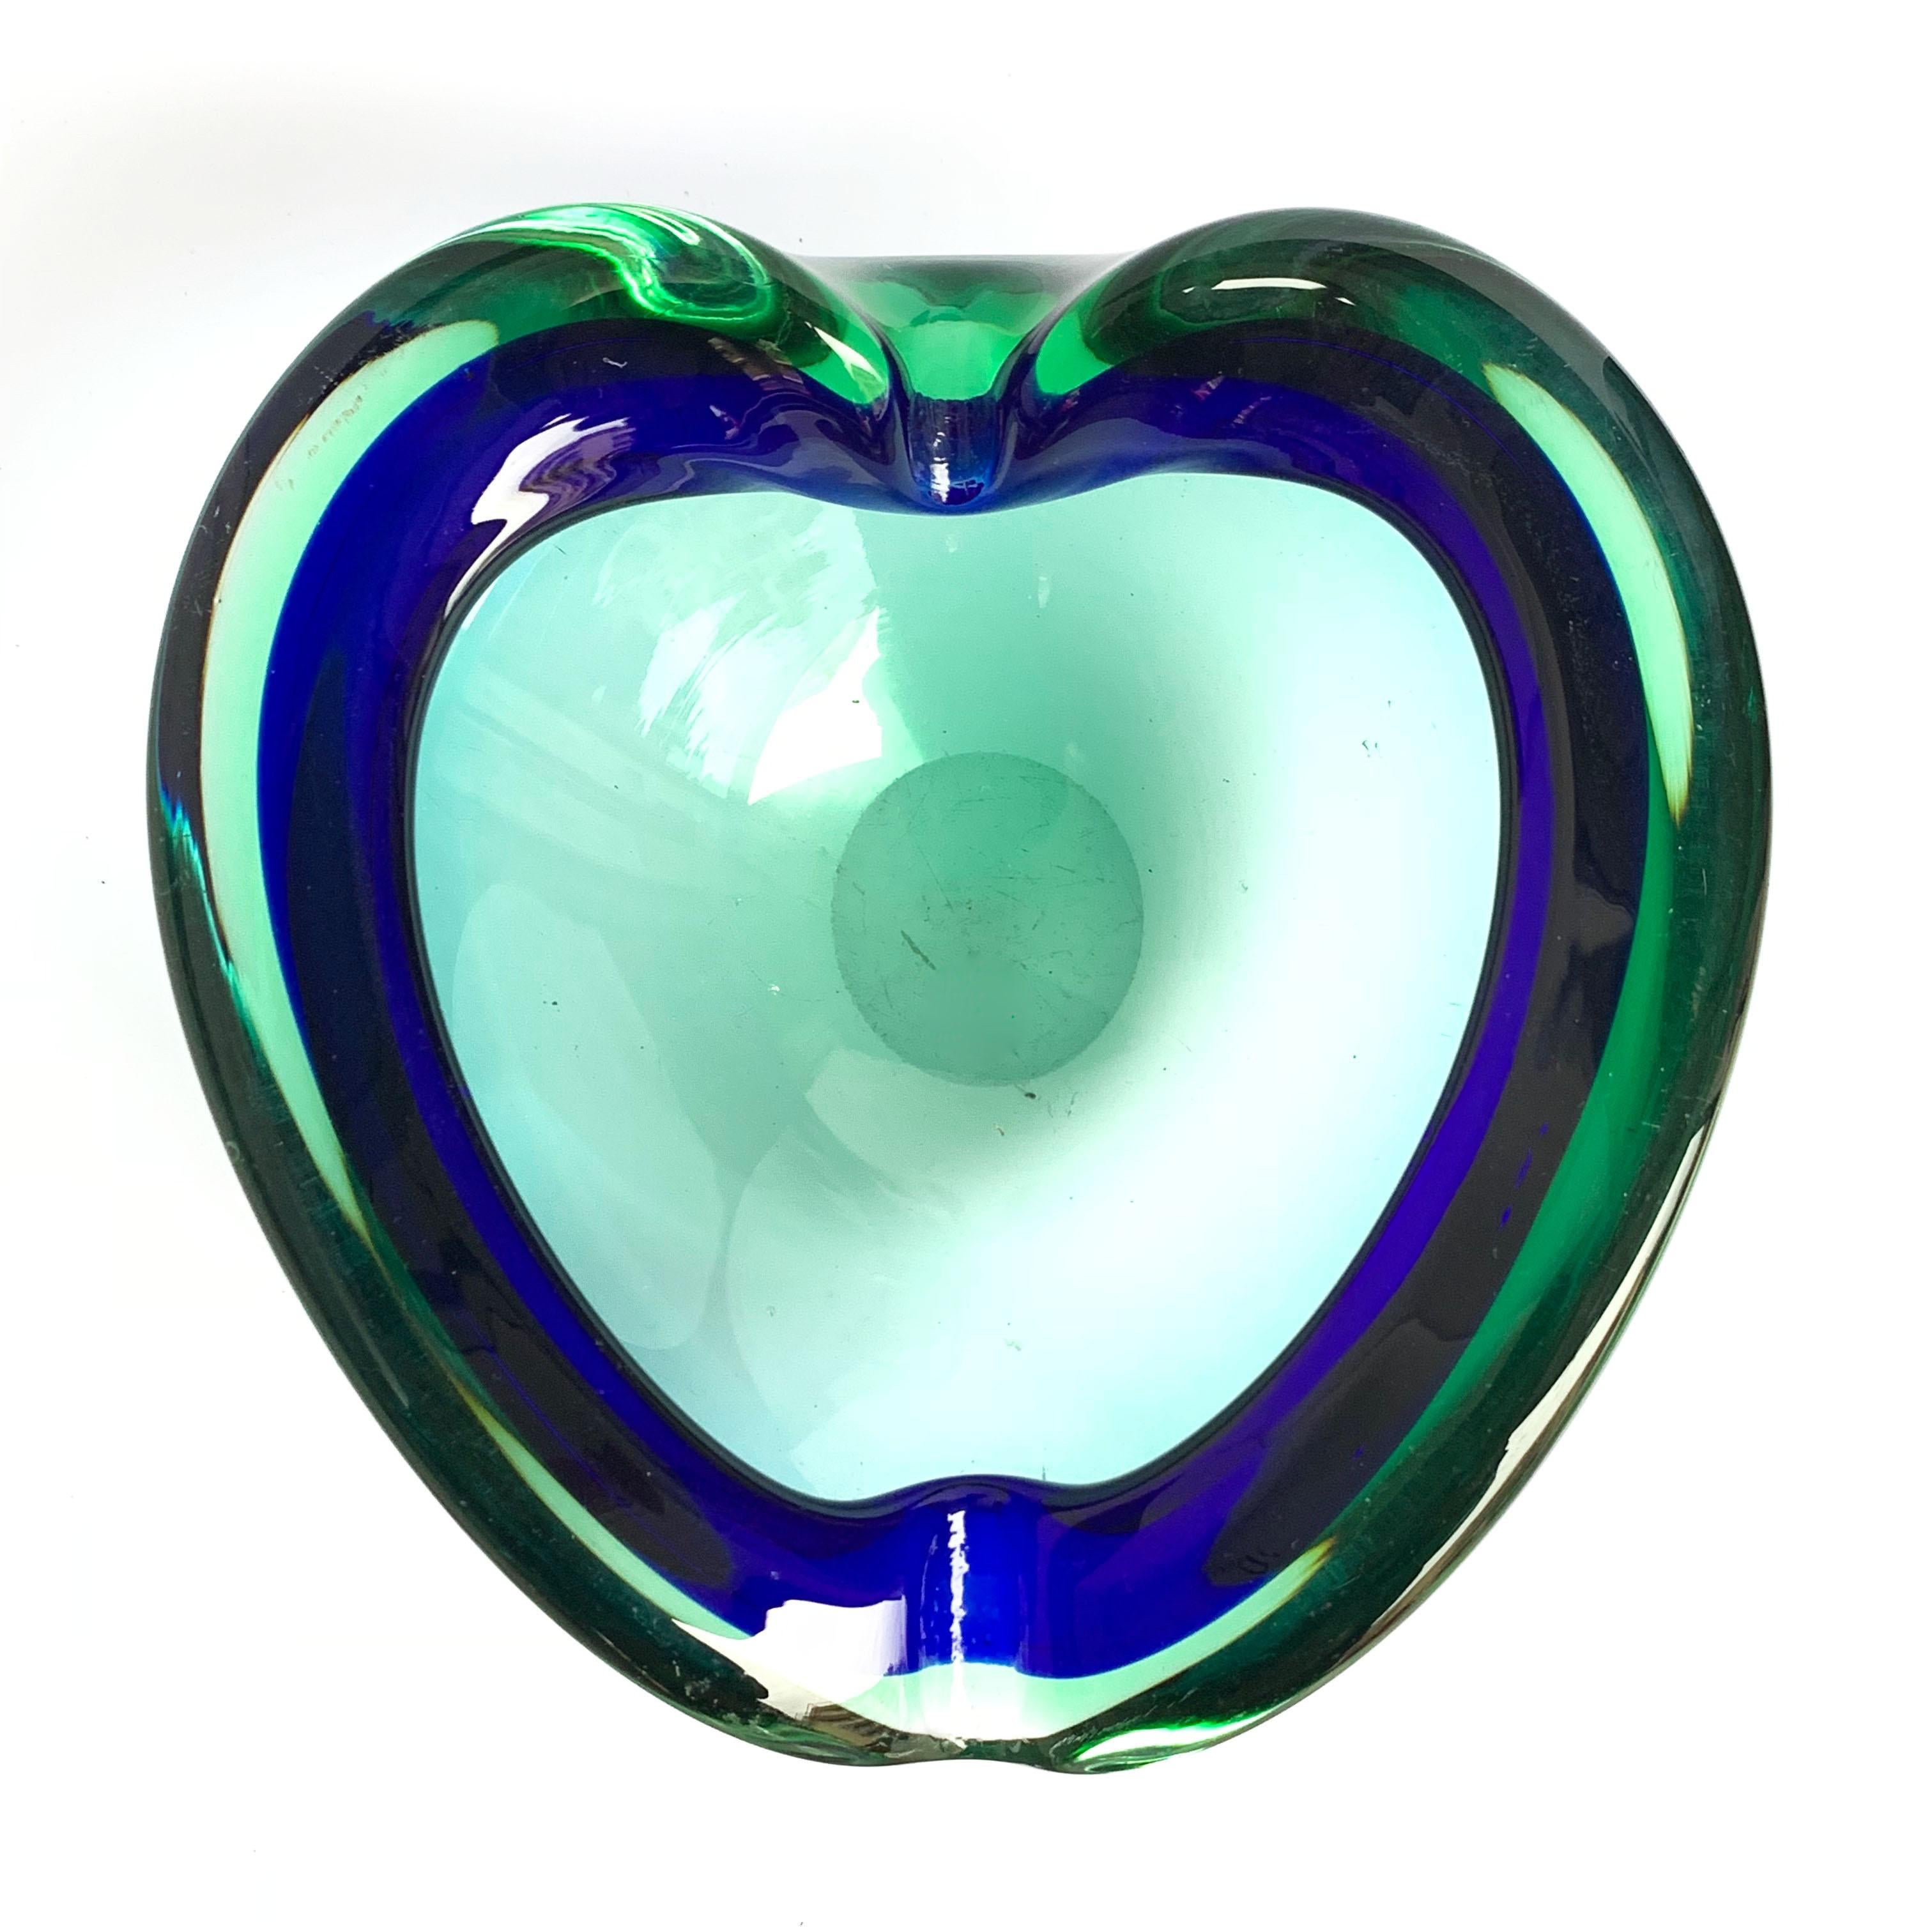 blue glass bowl